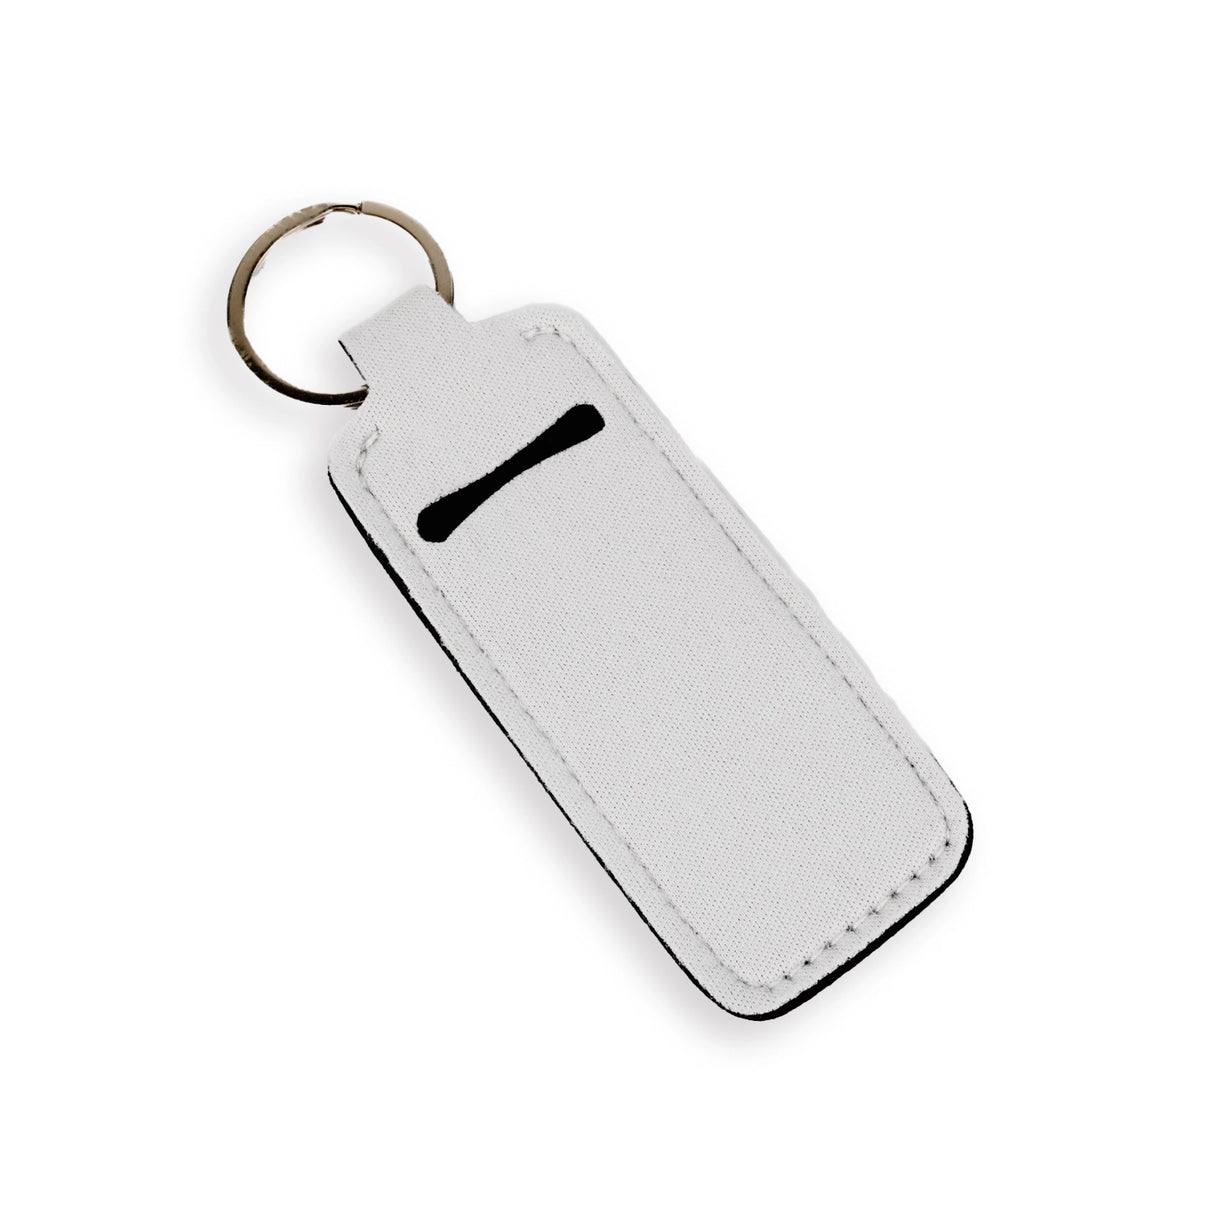 key chain lip balm holder rectangle shape